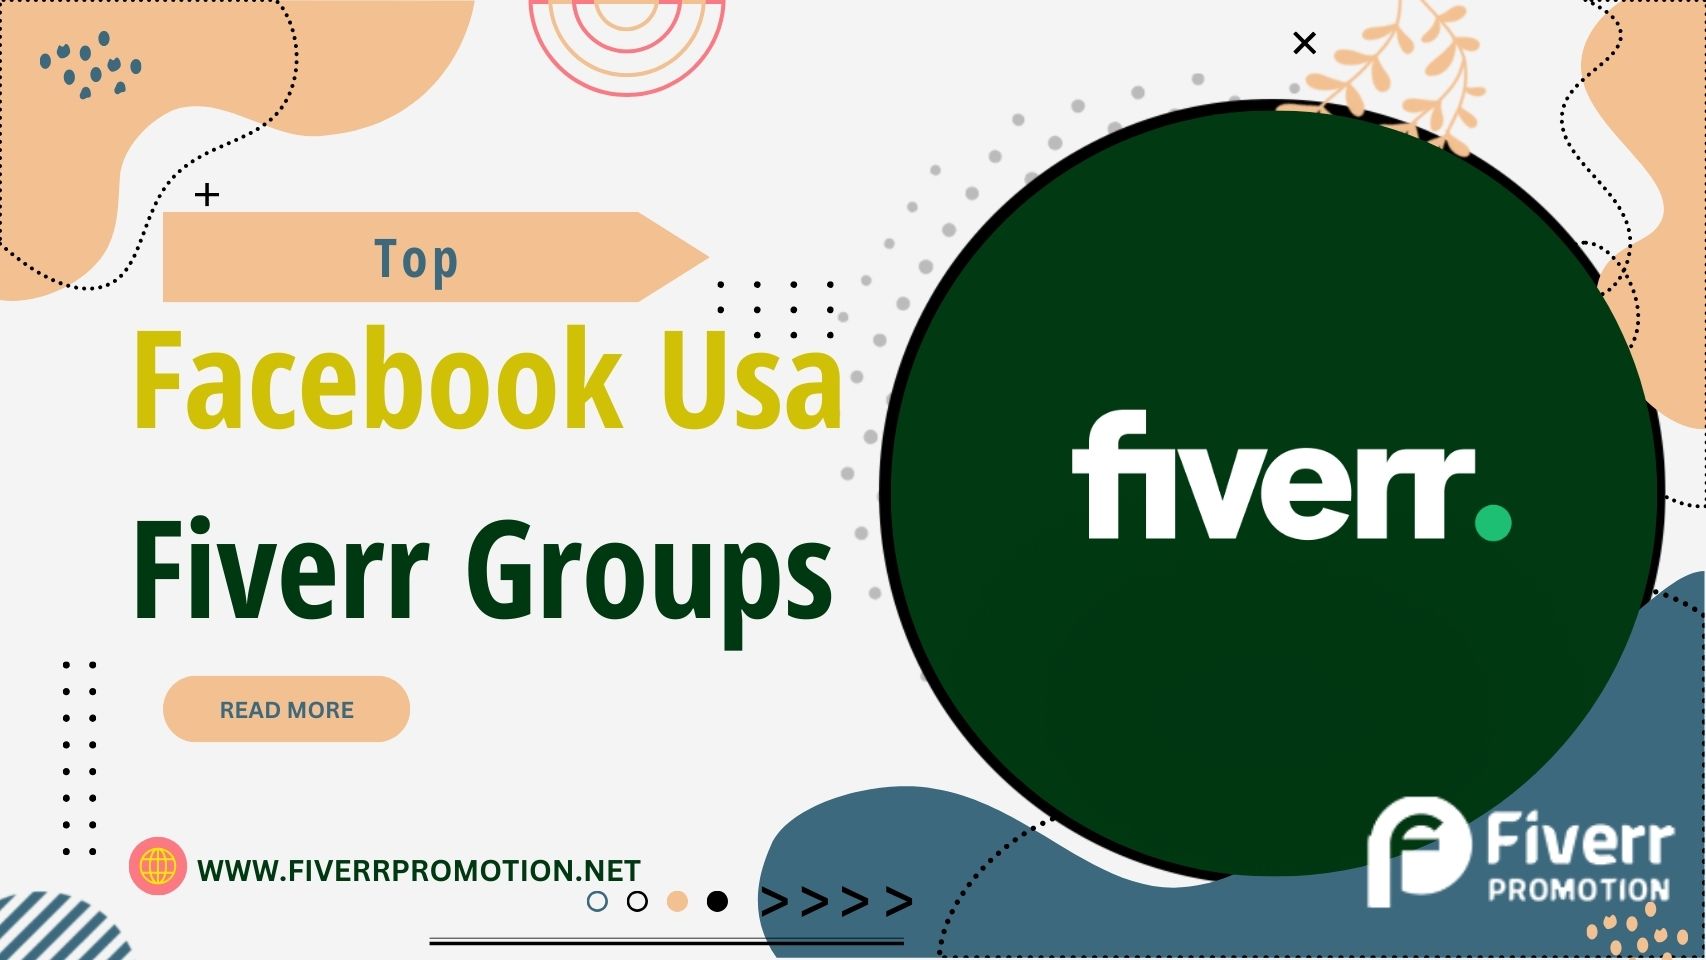 Top Facebook Usa Fiverr Groups